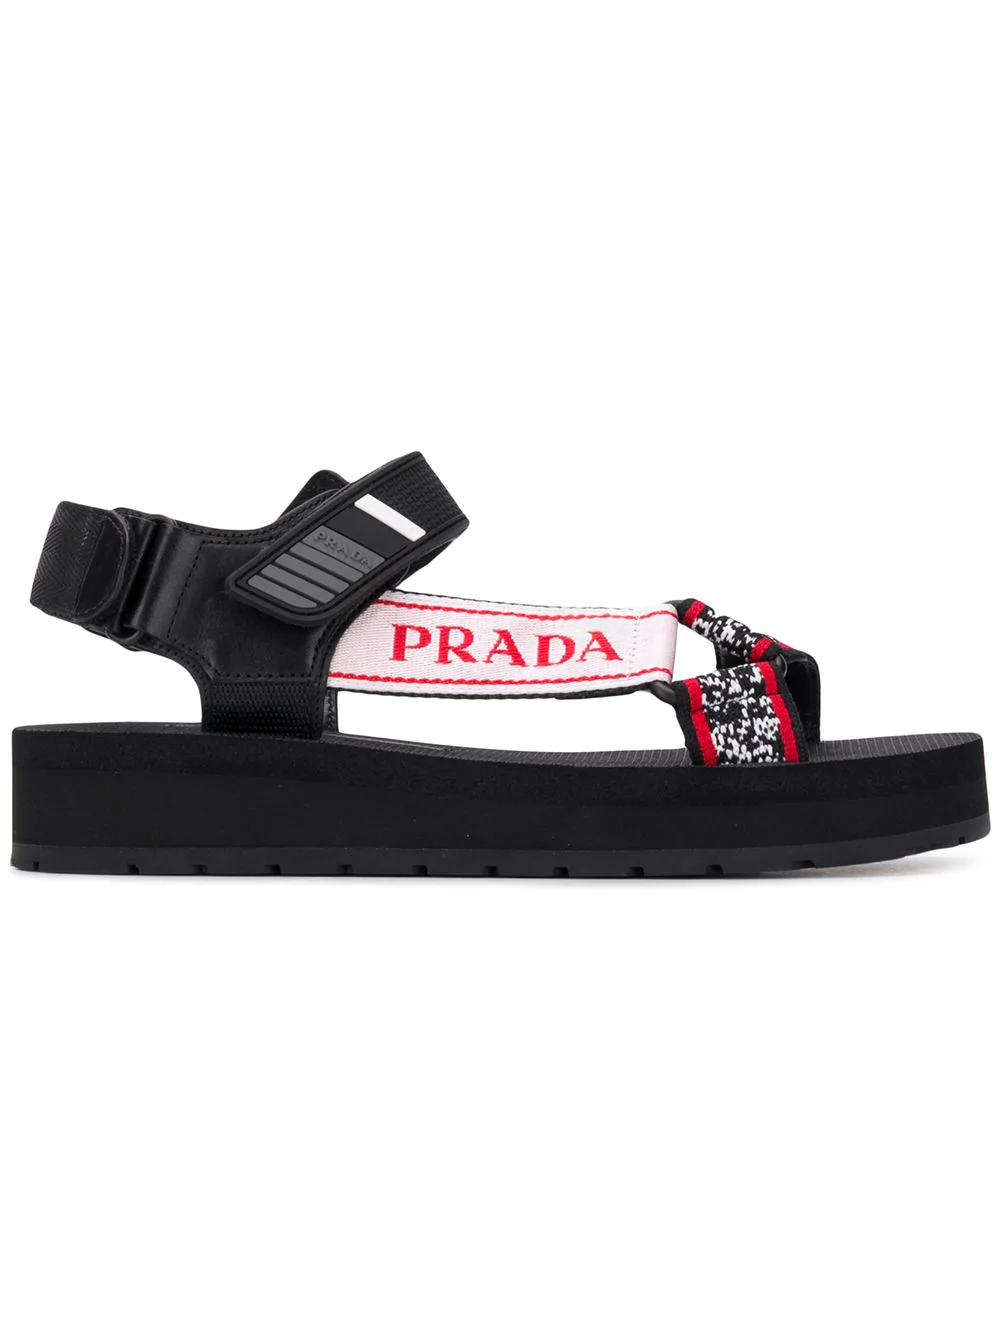 prada logo embossed sandals